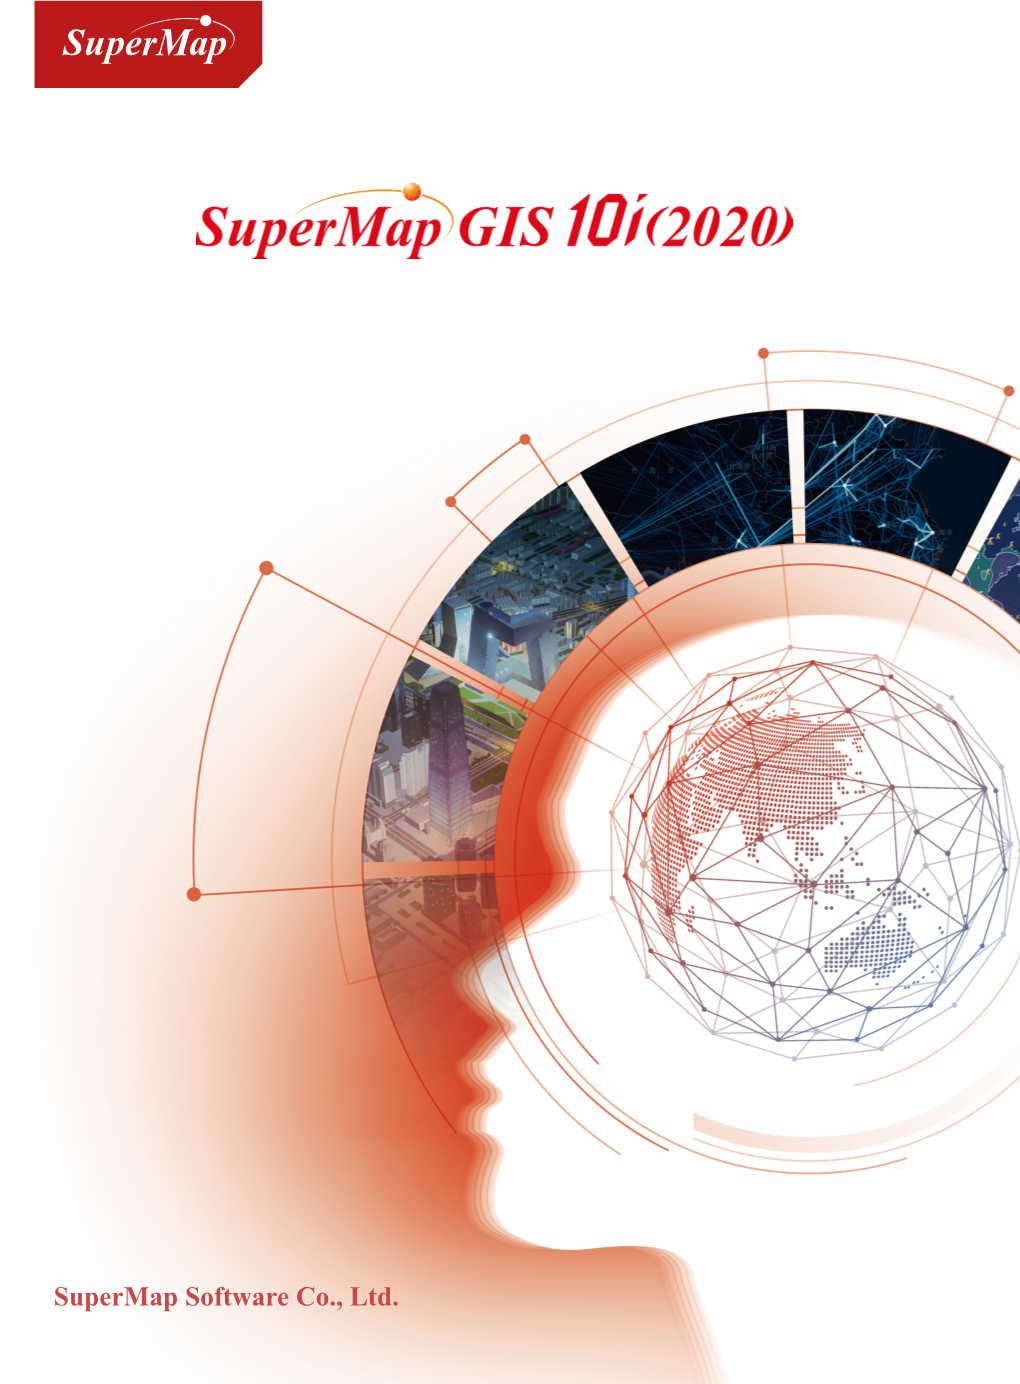 Supermap Software Co., Ltd. Technologies